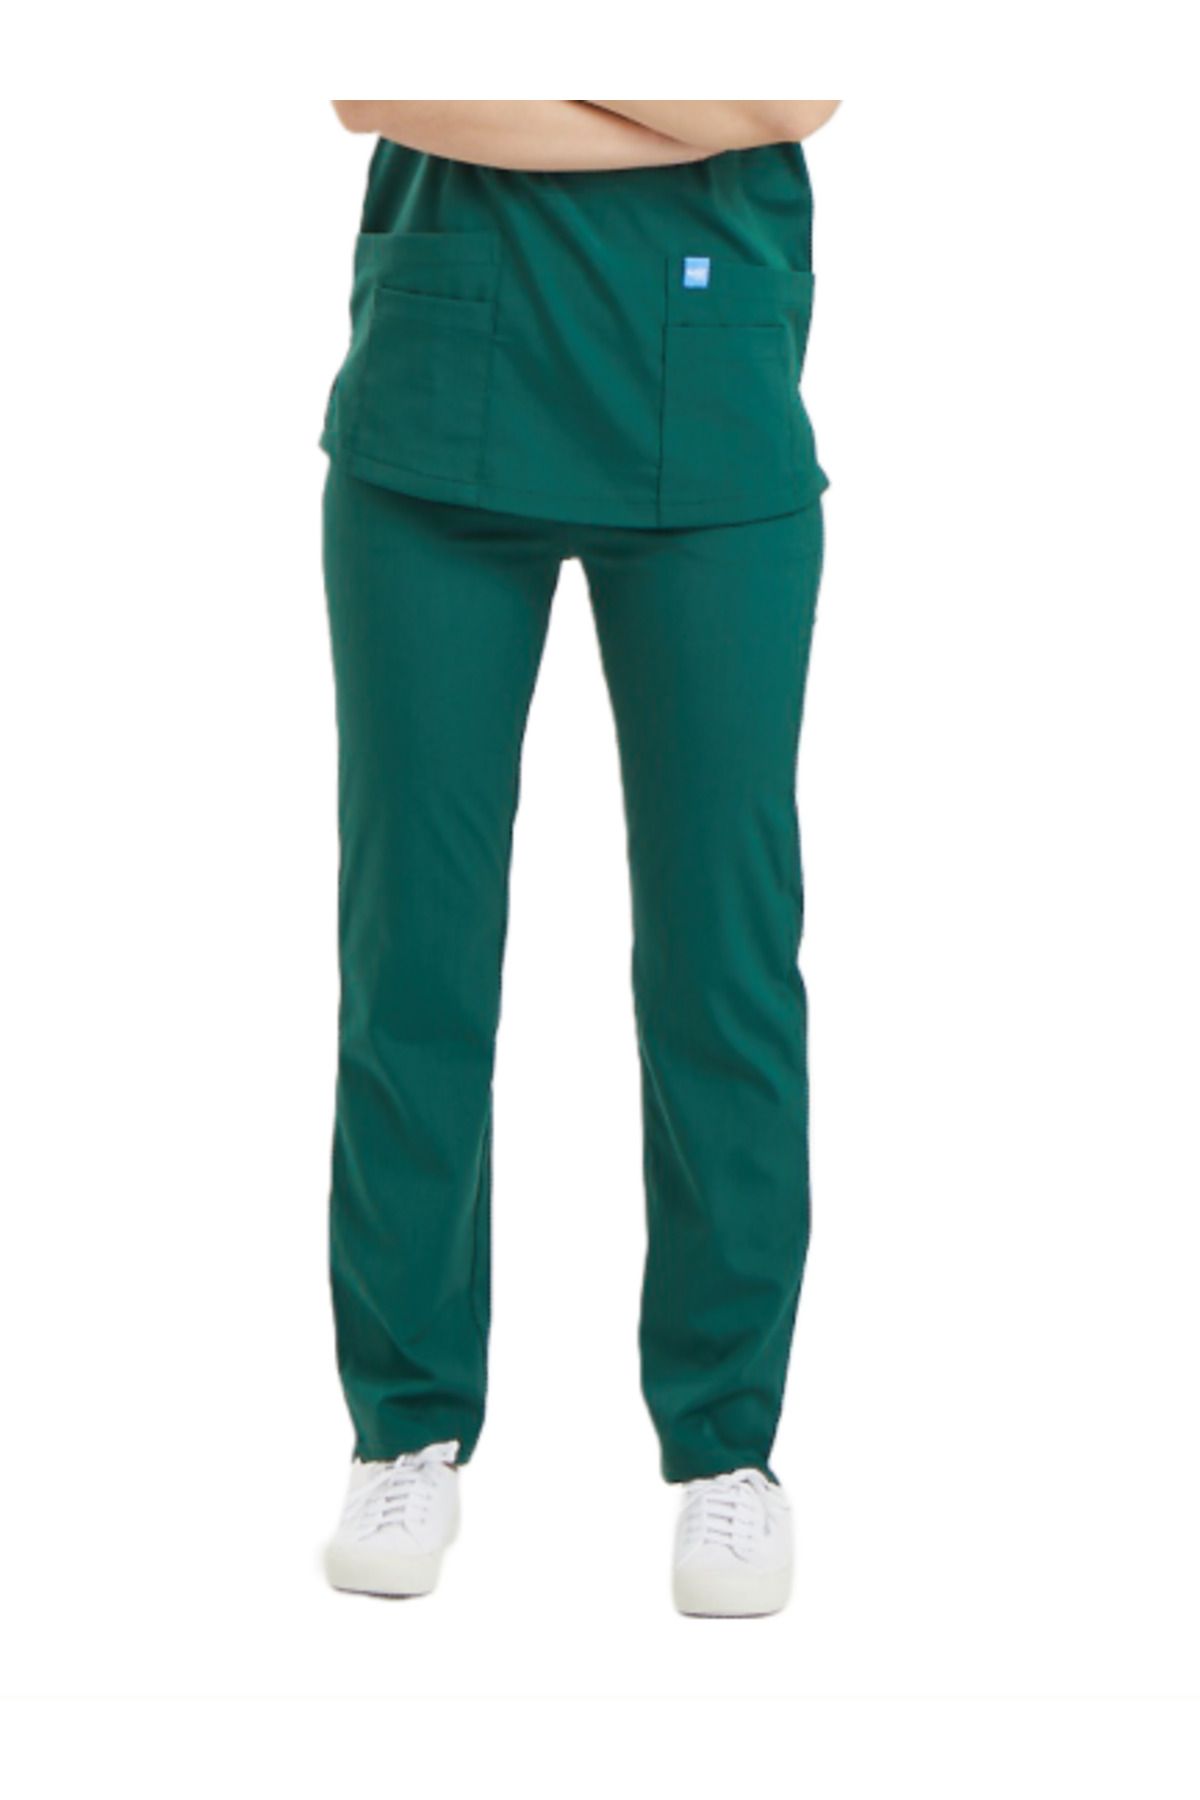 Wio Uniform BASIC- Kadın Likralı Yeşil Üniforma Pantolon